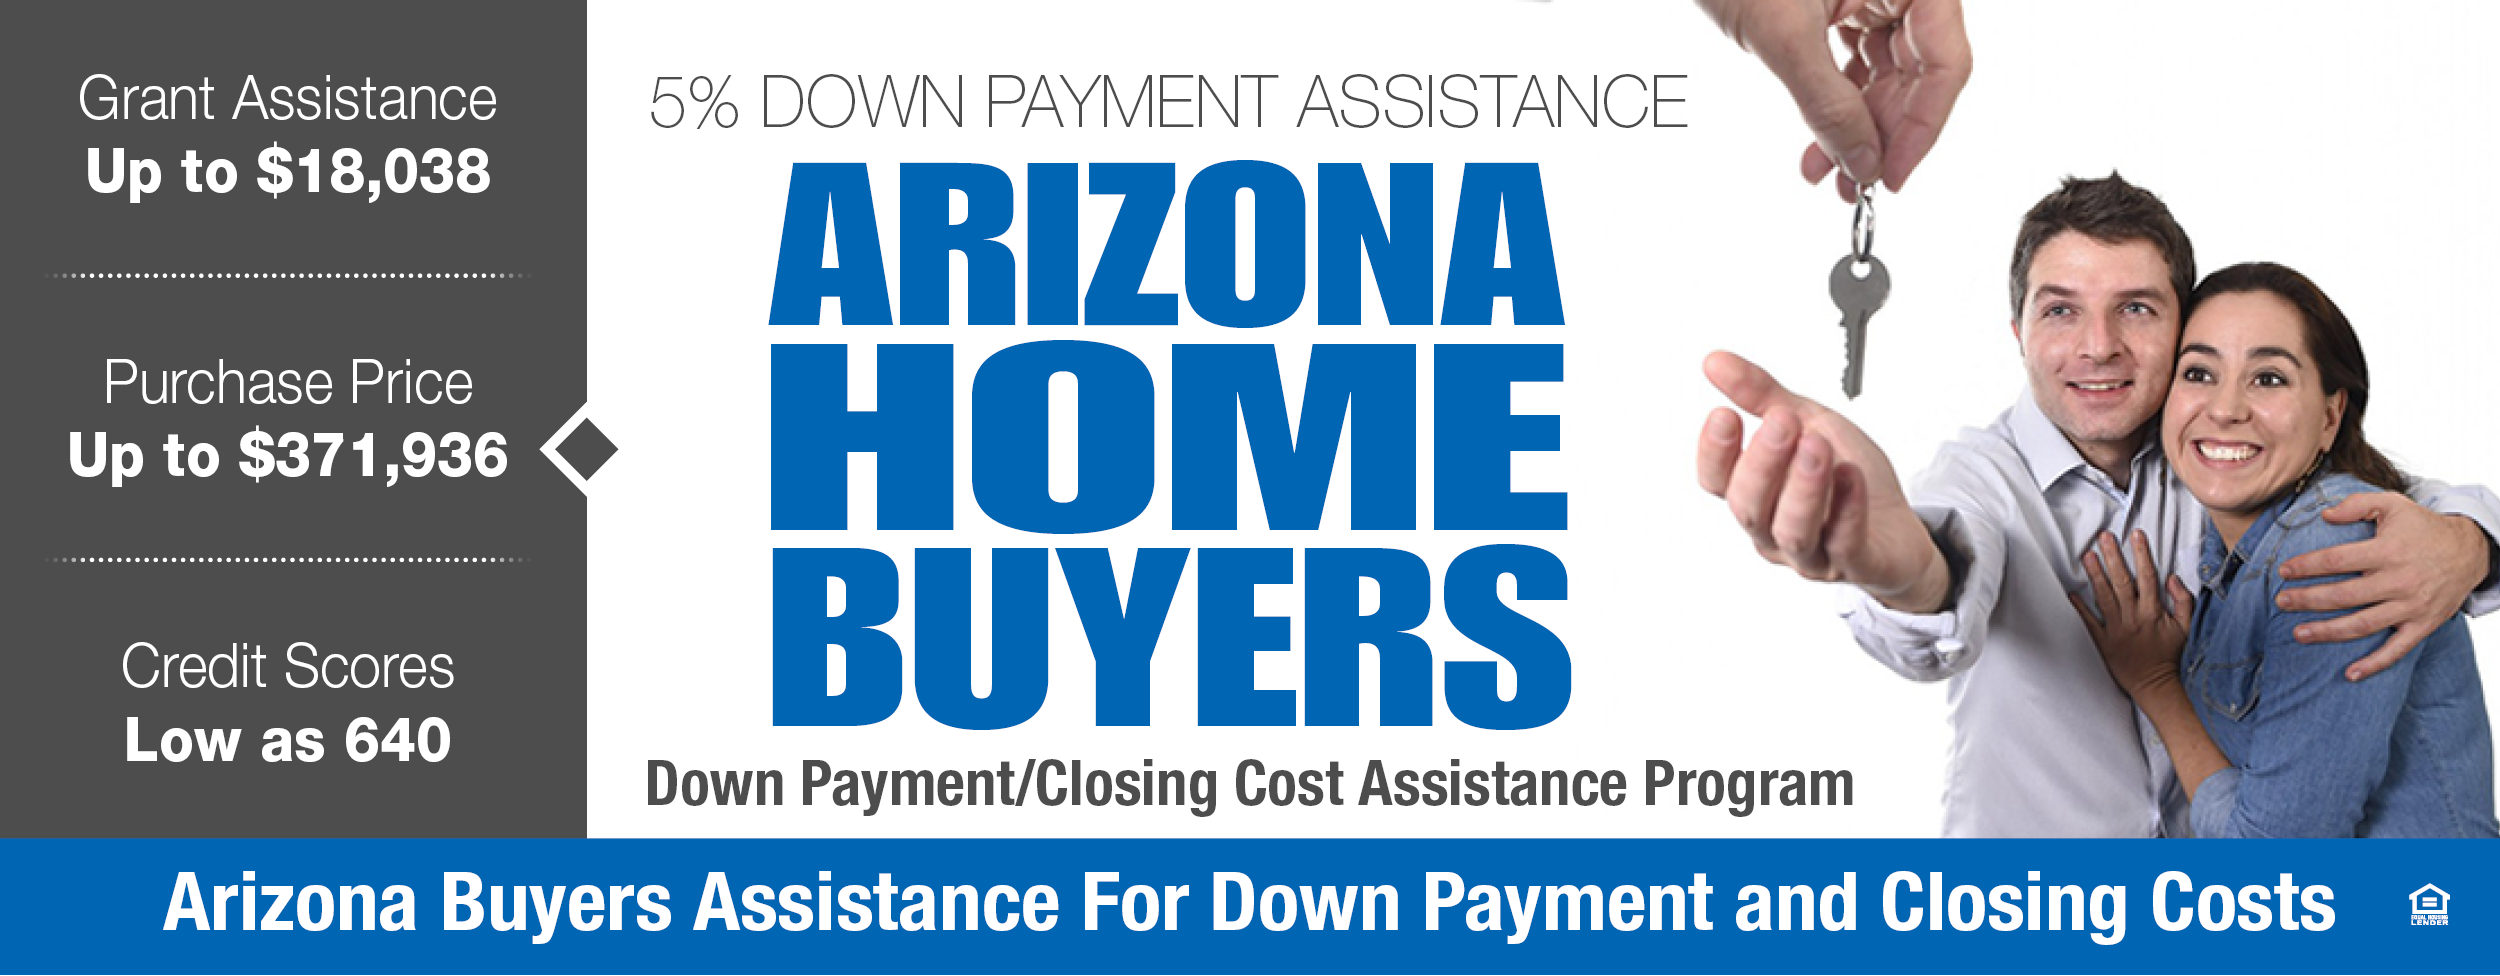 Arizona Down Payment Assistance